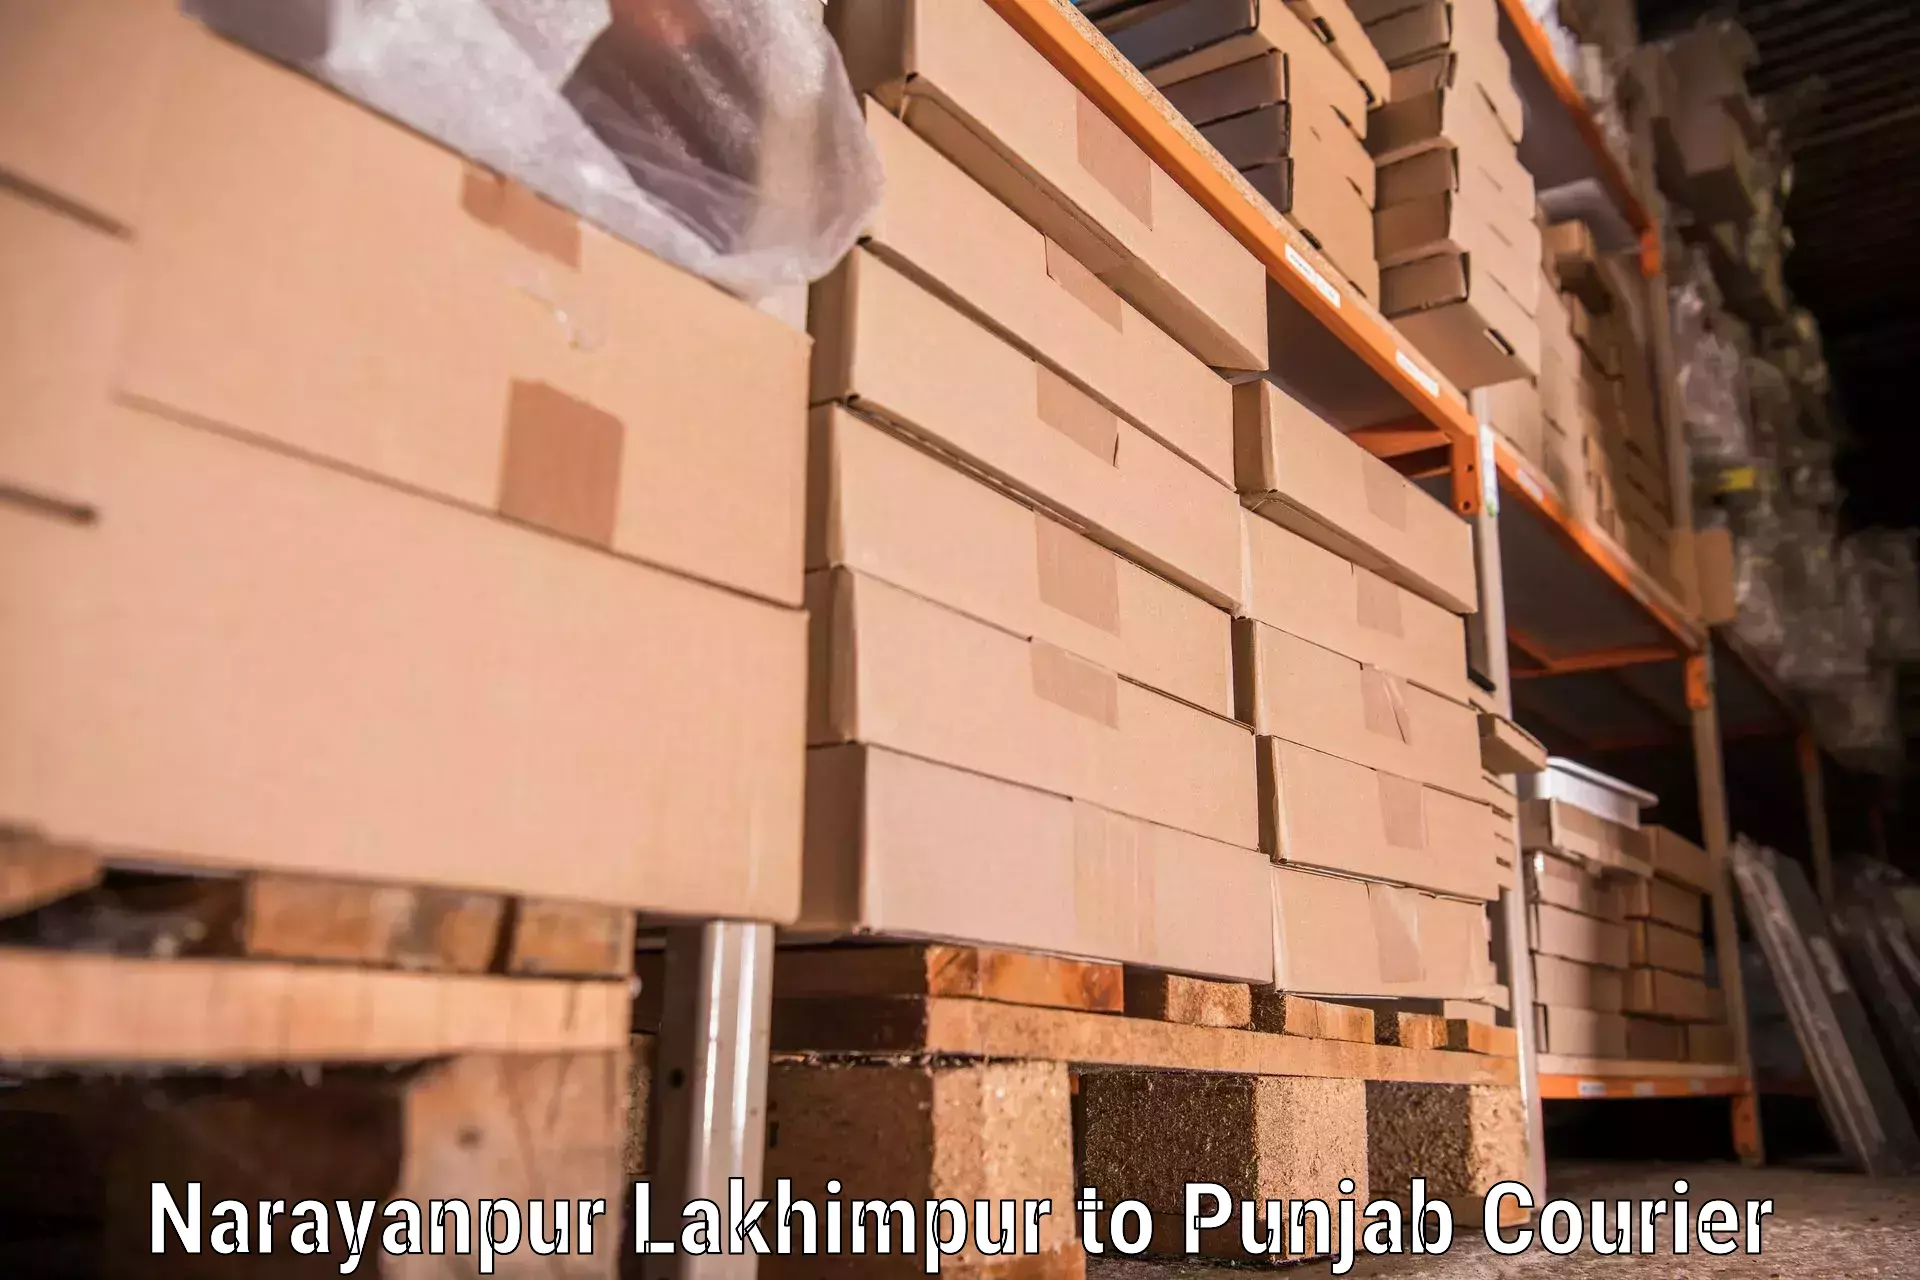 Furniture delivery service Narayanpur Lakhimpur to Batala